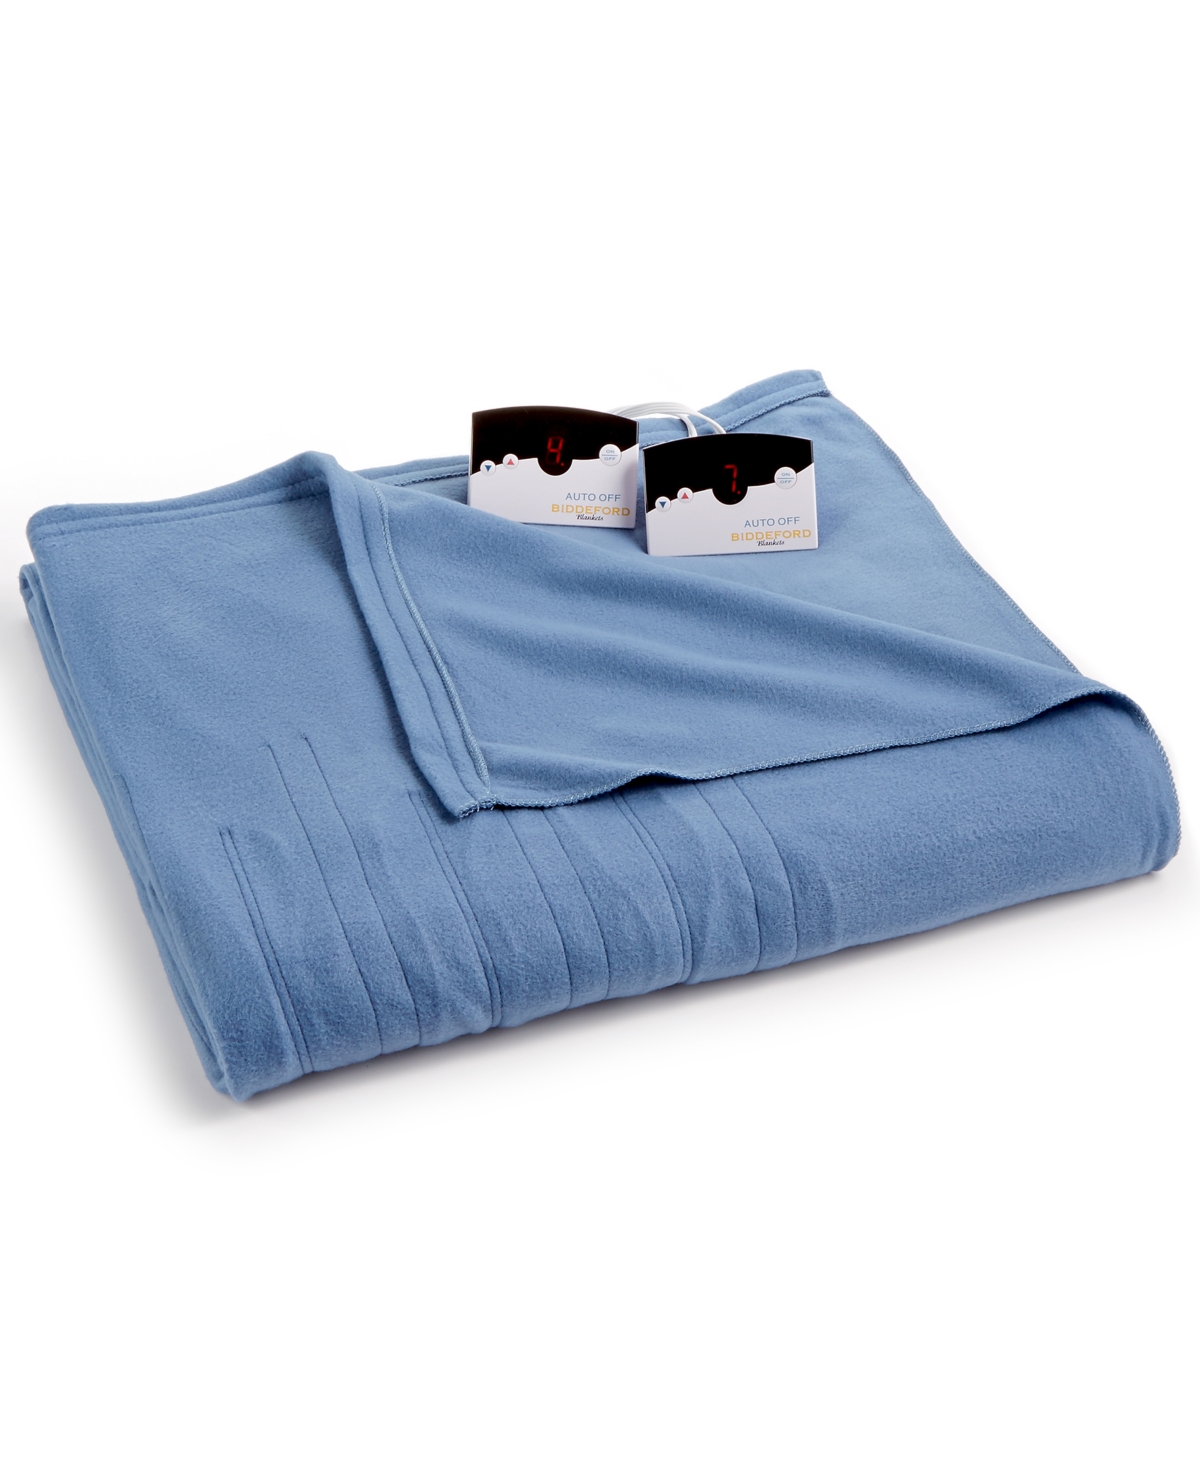 Biddeford Comfort Knit Fleece Electric King Blanket, Created For Macys Bedding